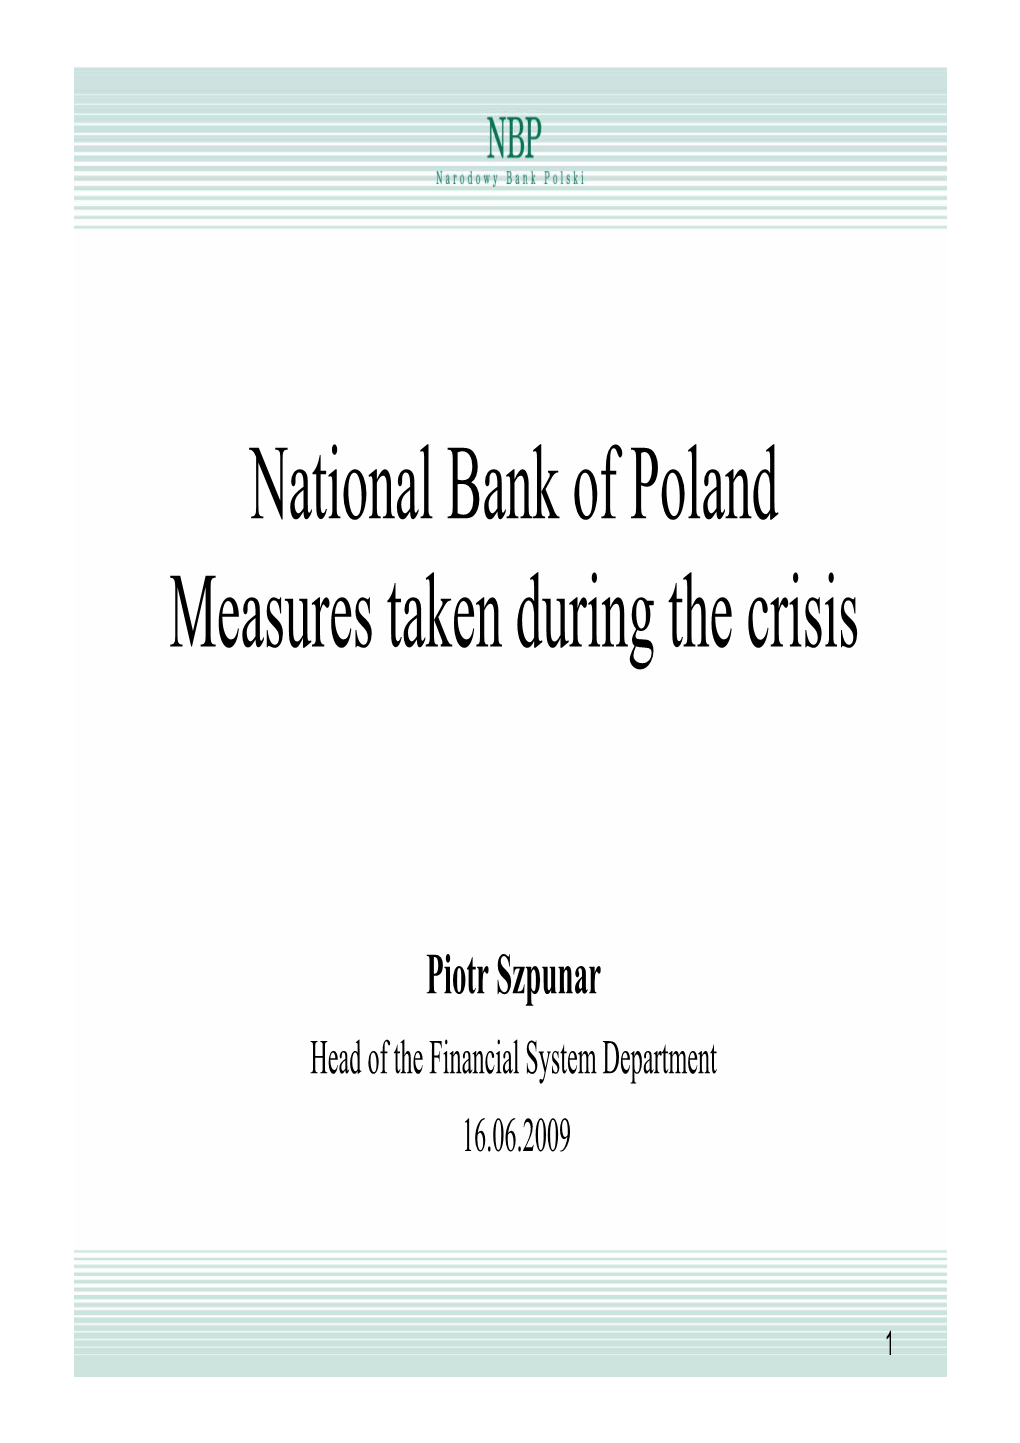 Presentation: National Bank of Poland Measures Taken During the Crisis